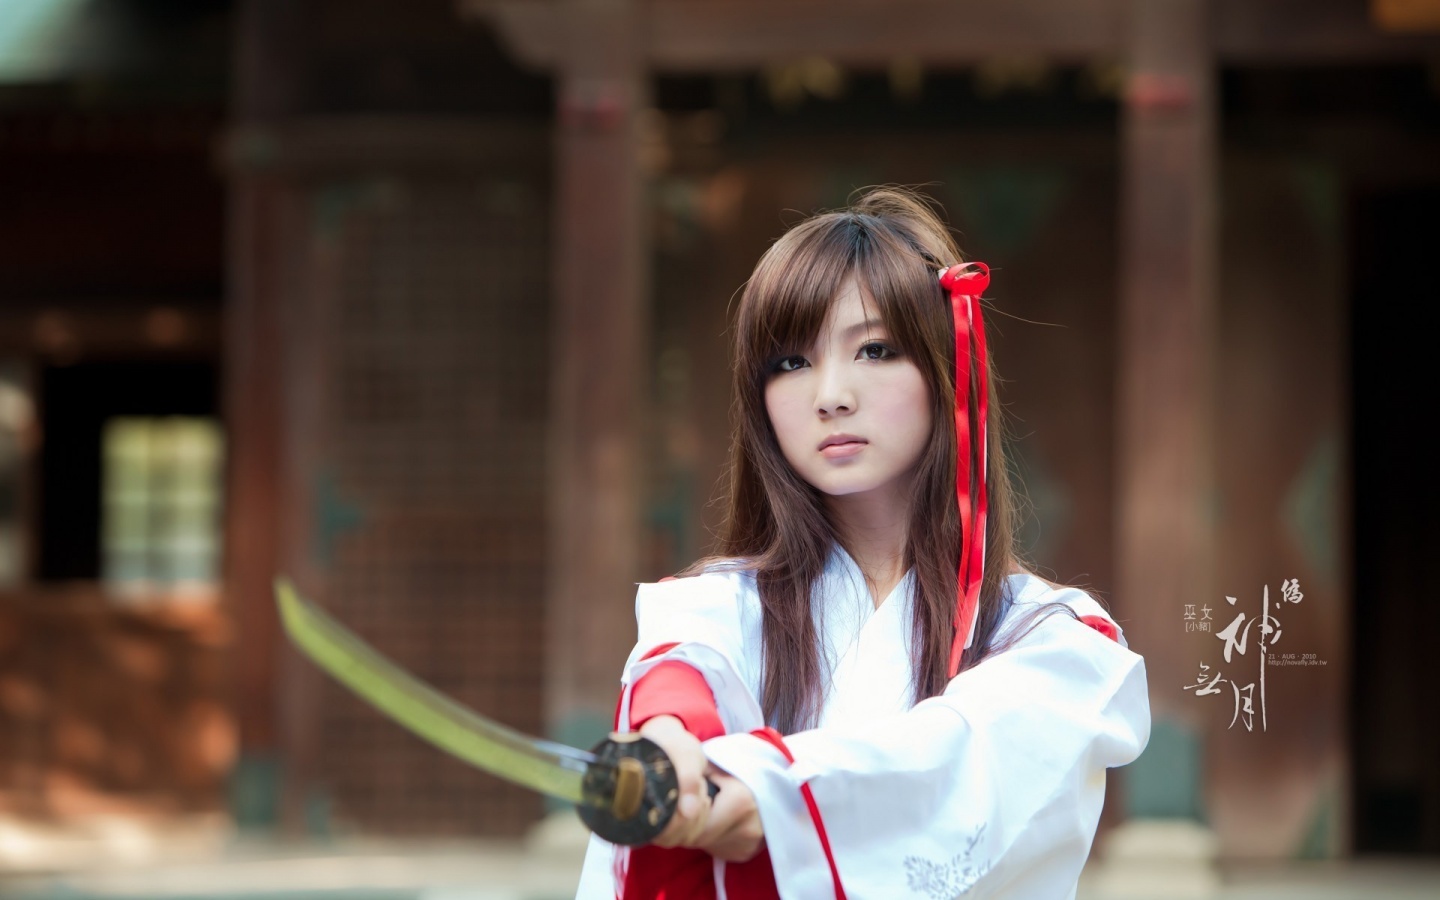 http://3.bp.blogspot.com/-euabUm3UnE8/TfEvG6xNEDI/AAAAAAAAB6A/vQFi3GDyLw0/s1600/ws_Girl_with_samurai_sword_1440x900.jpg